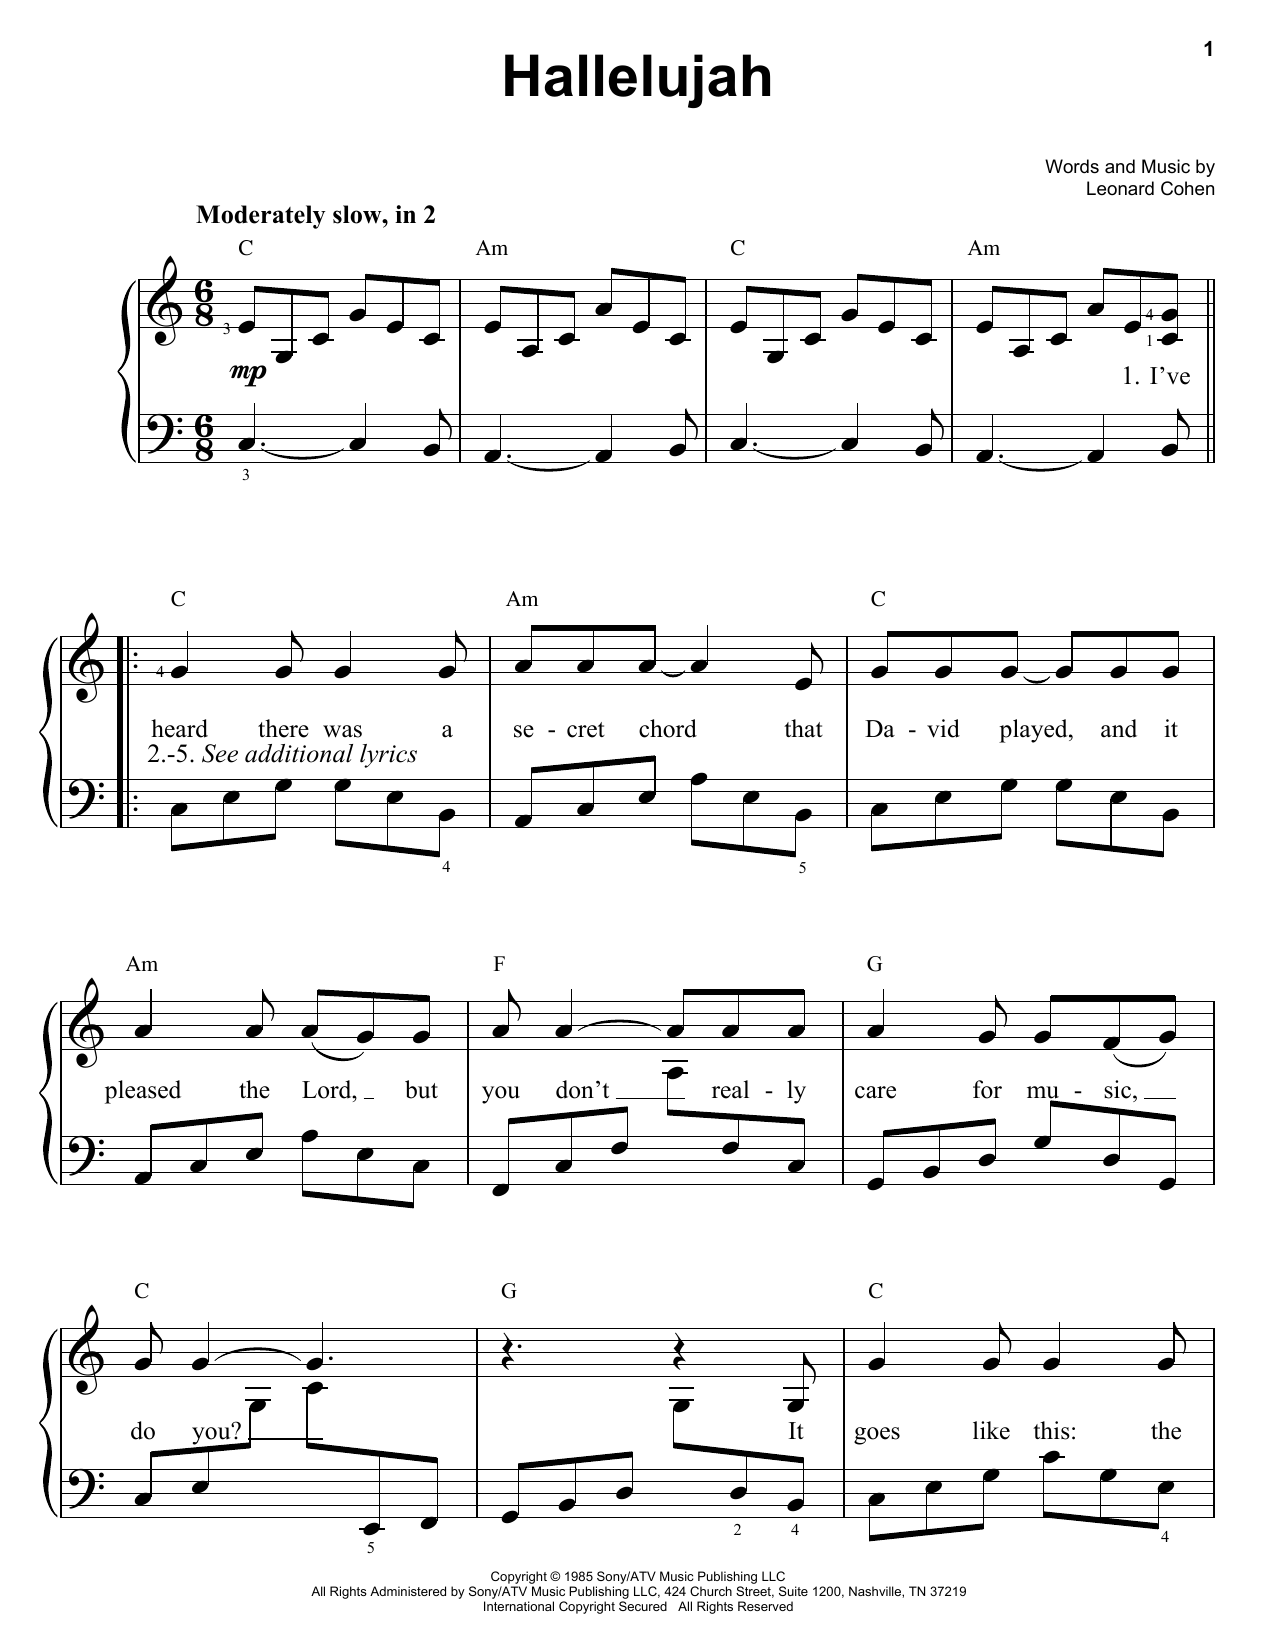 Leonard Cohen Hallelujah Sheet Music Notes & Chords for Solo Guitar - Download or Print PDF